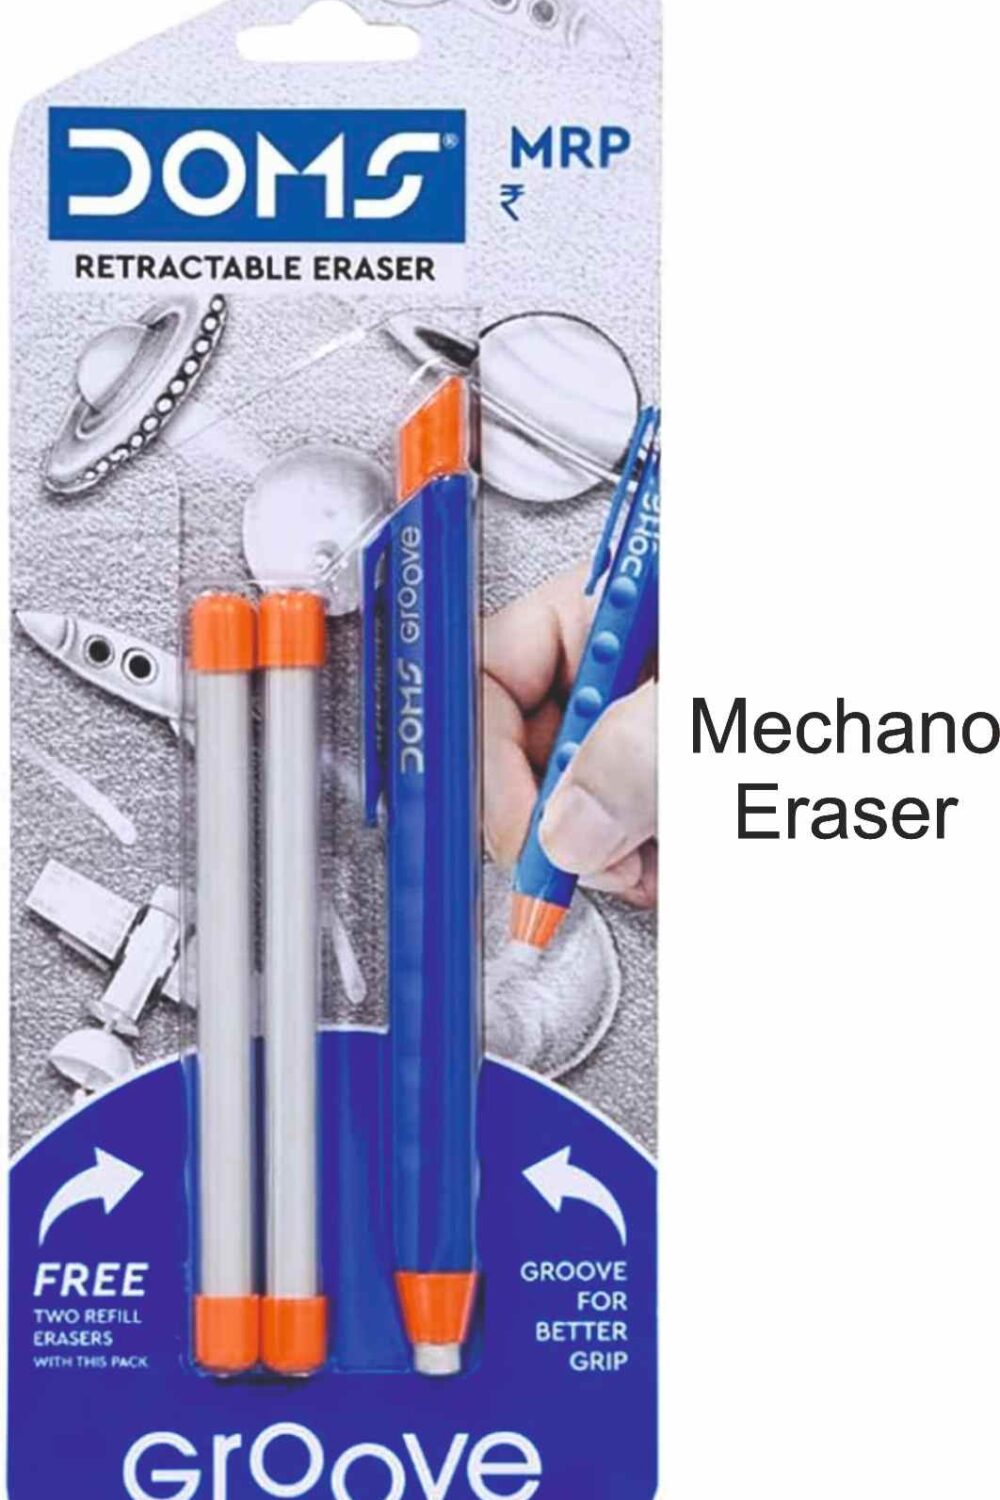 Mechano Eraser